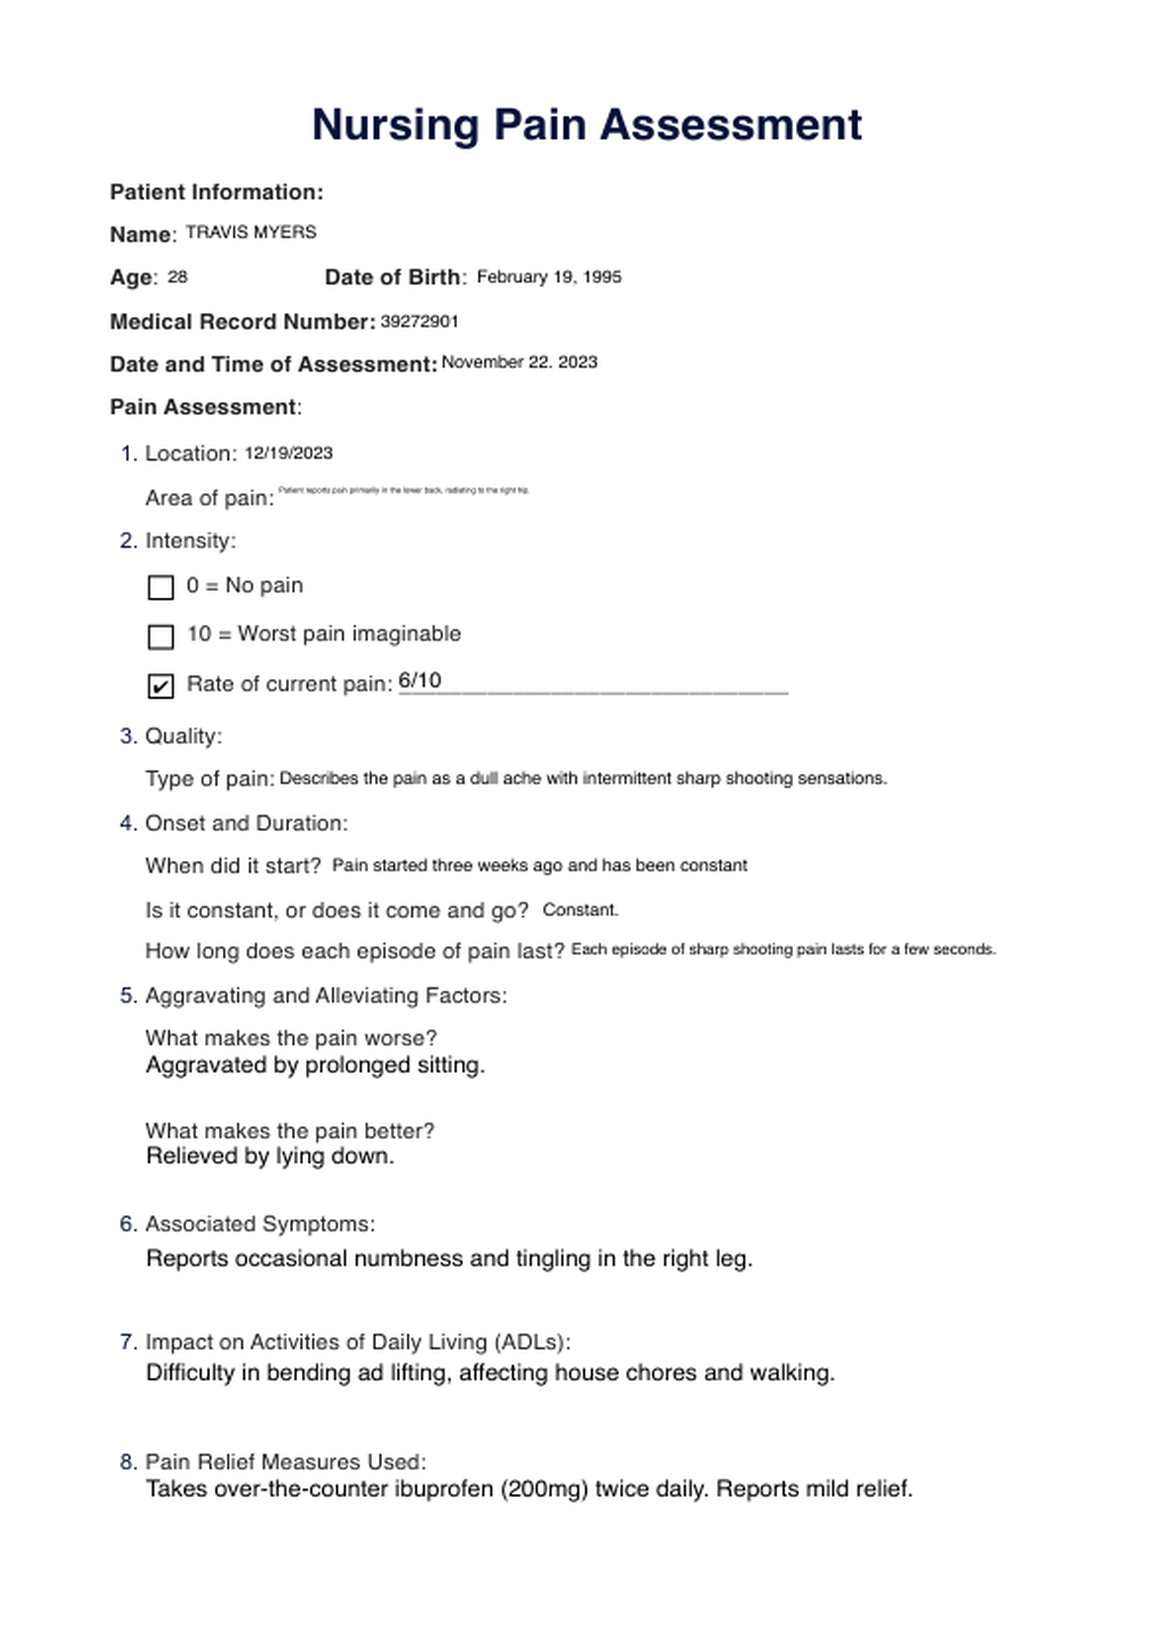 Nursing Pain Assessment Template PDF Example